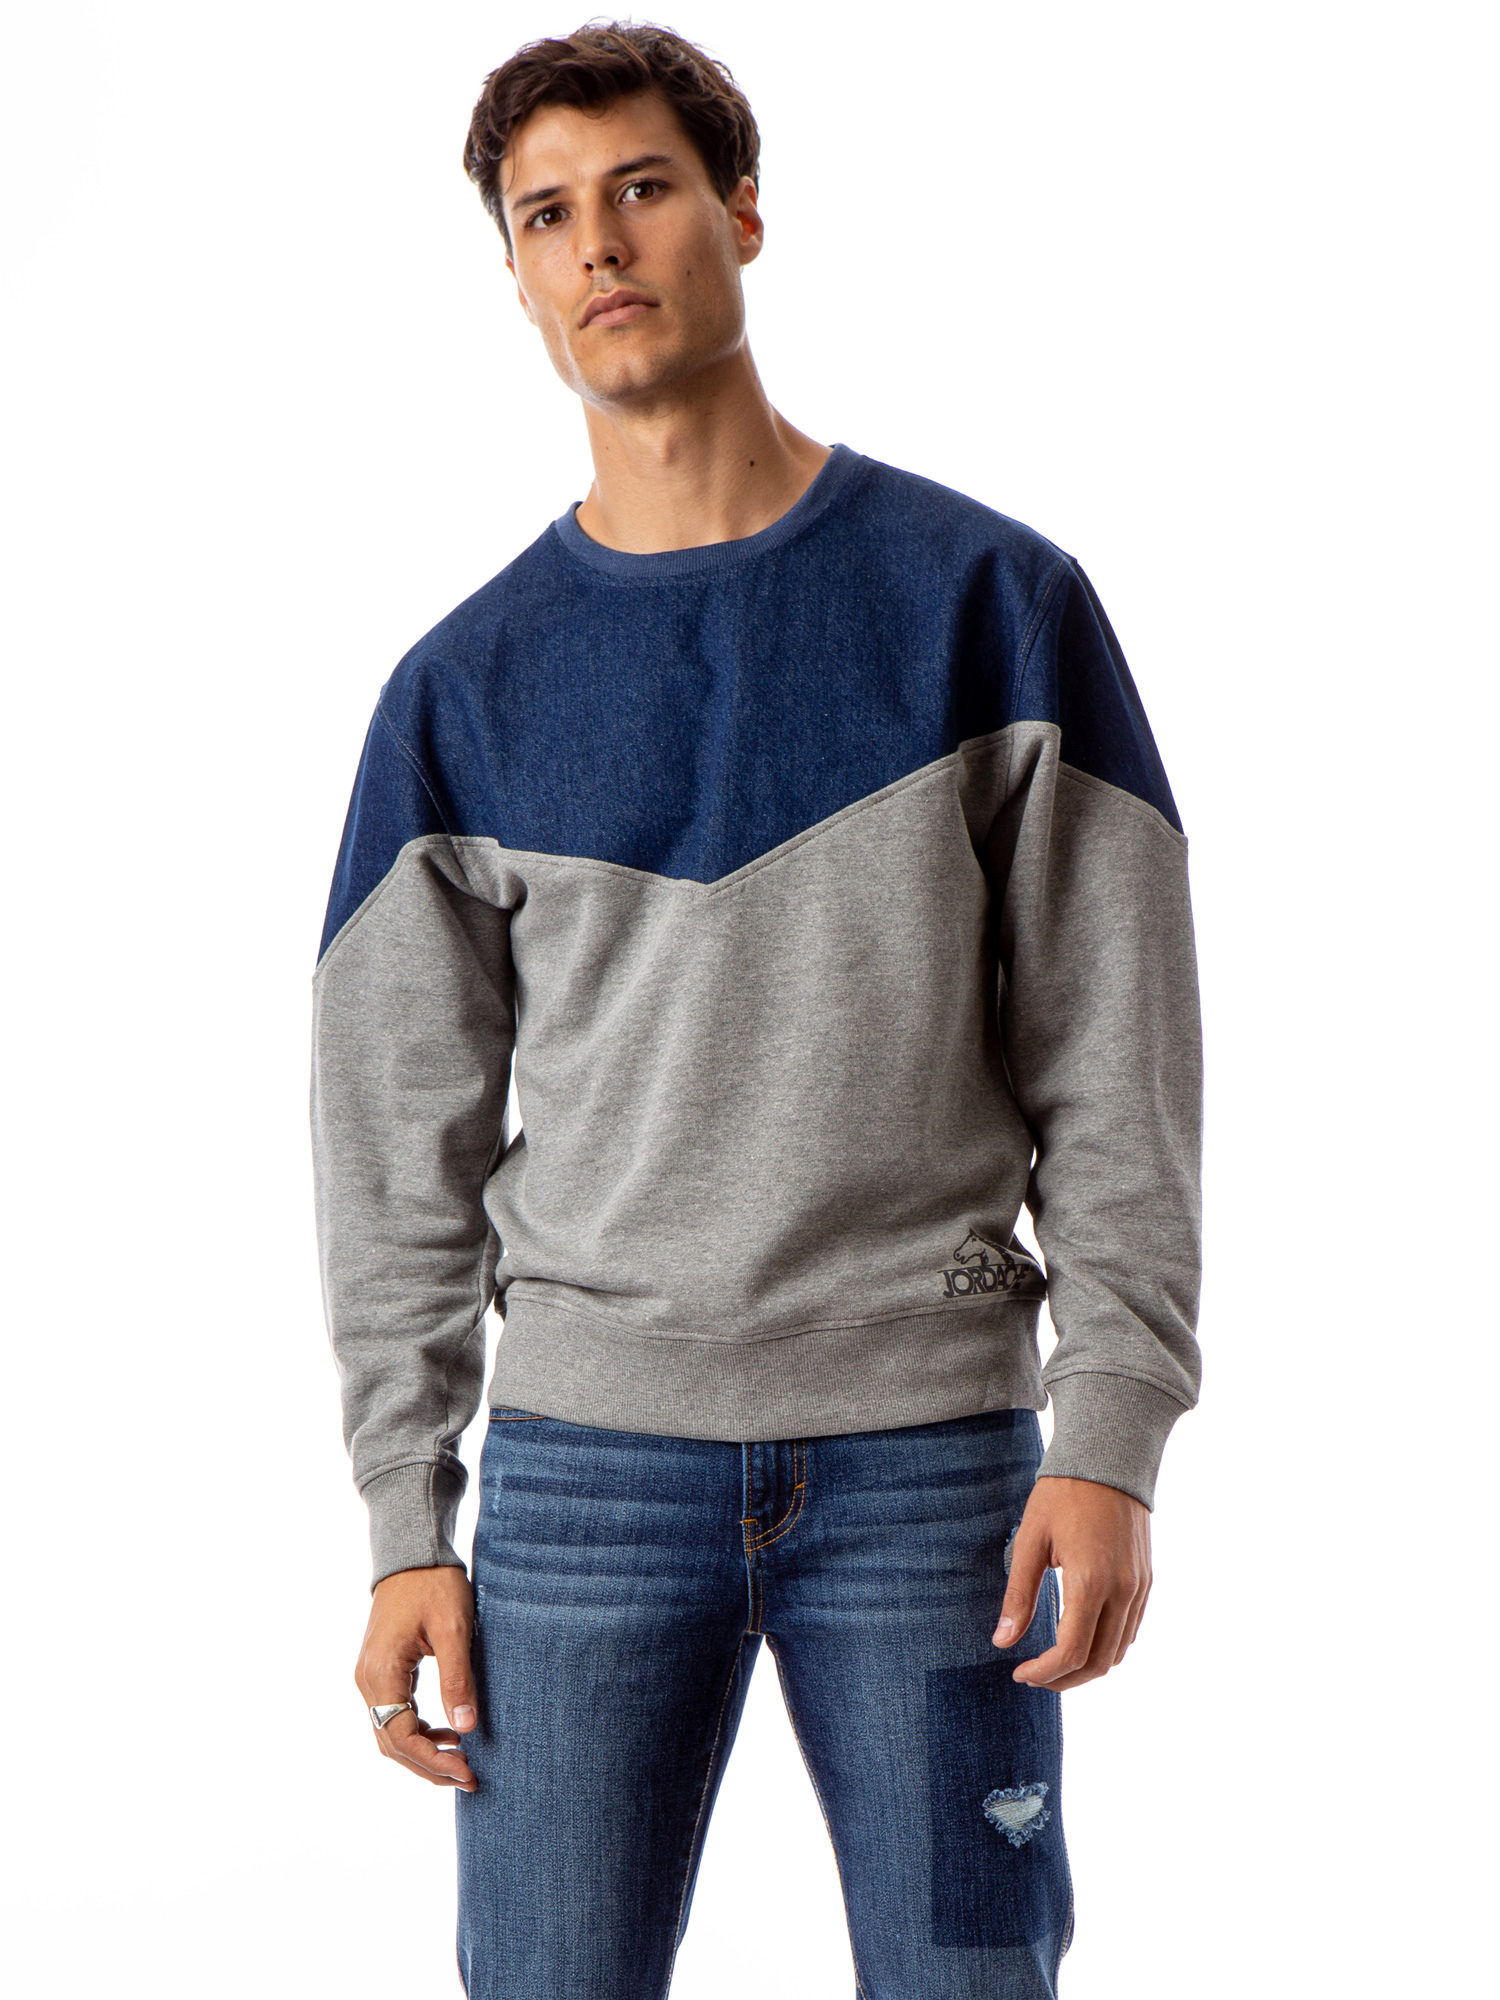 Jordache Vintage Men's Alen Yoke Pullover Sweatshirt, Sizes S-2XL - image 1 of 5